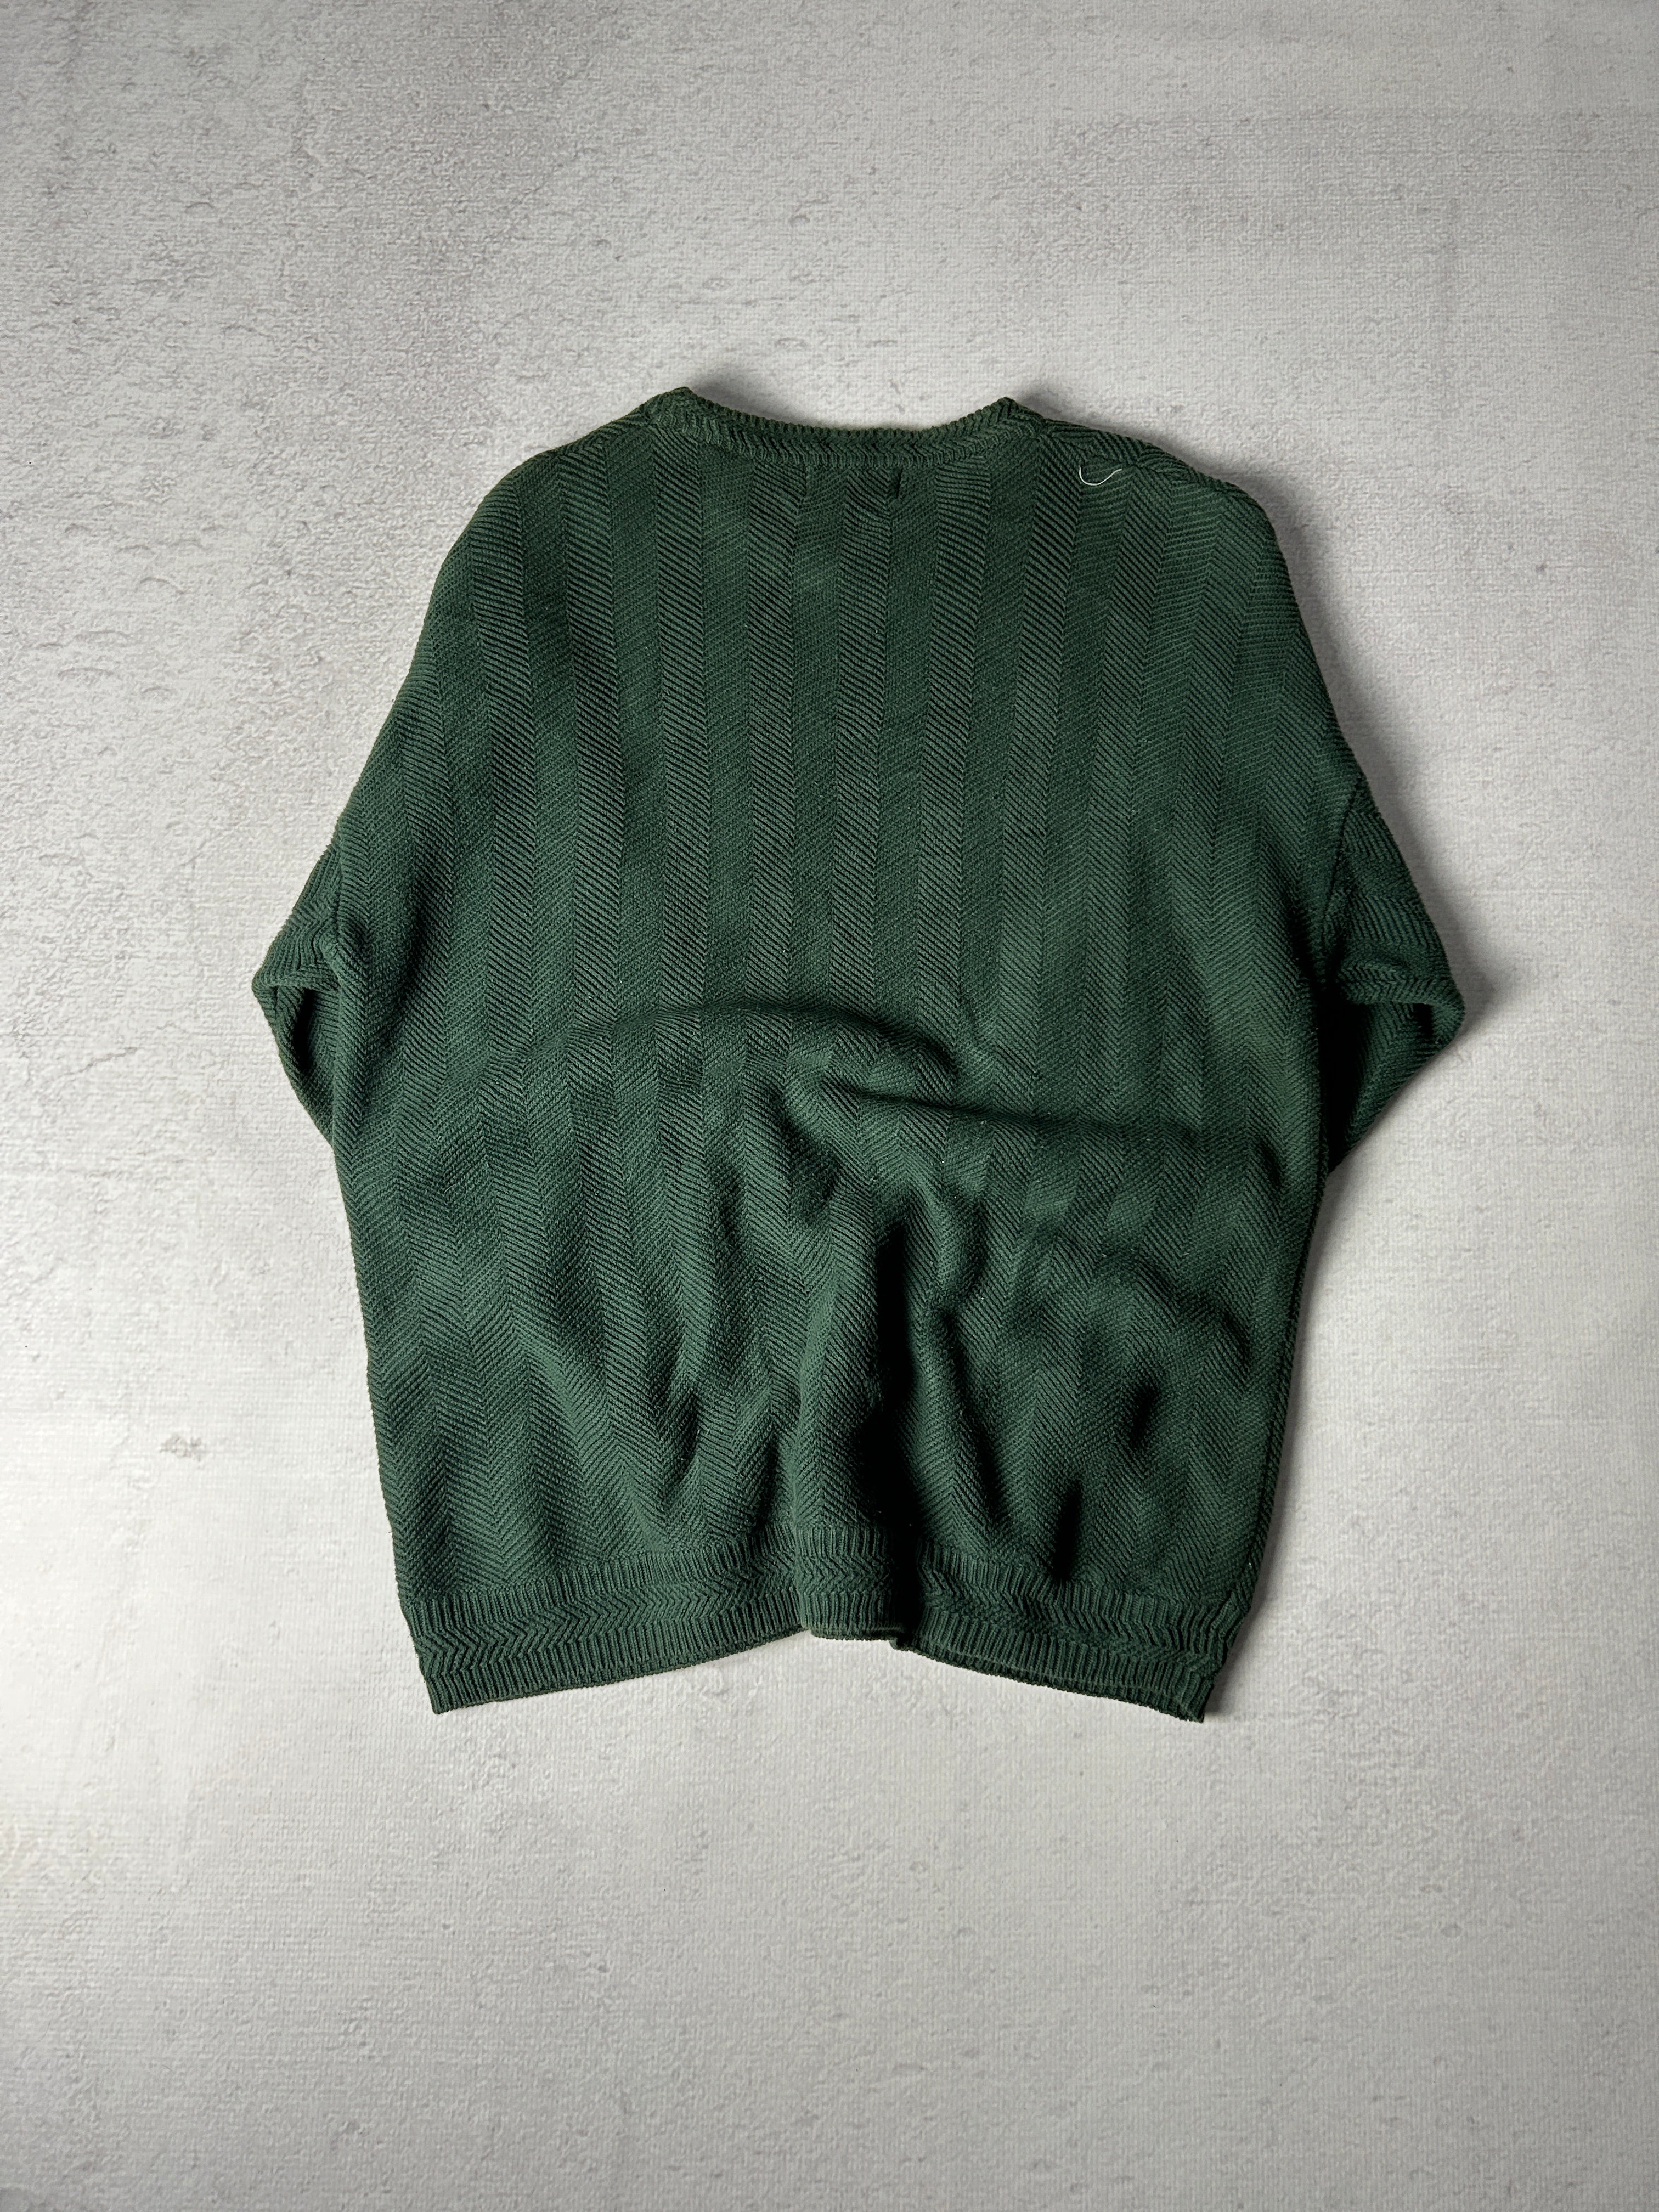 Vintage Chaps Ralph Lauren Knitted Sweater - Men's XL